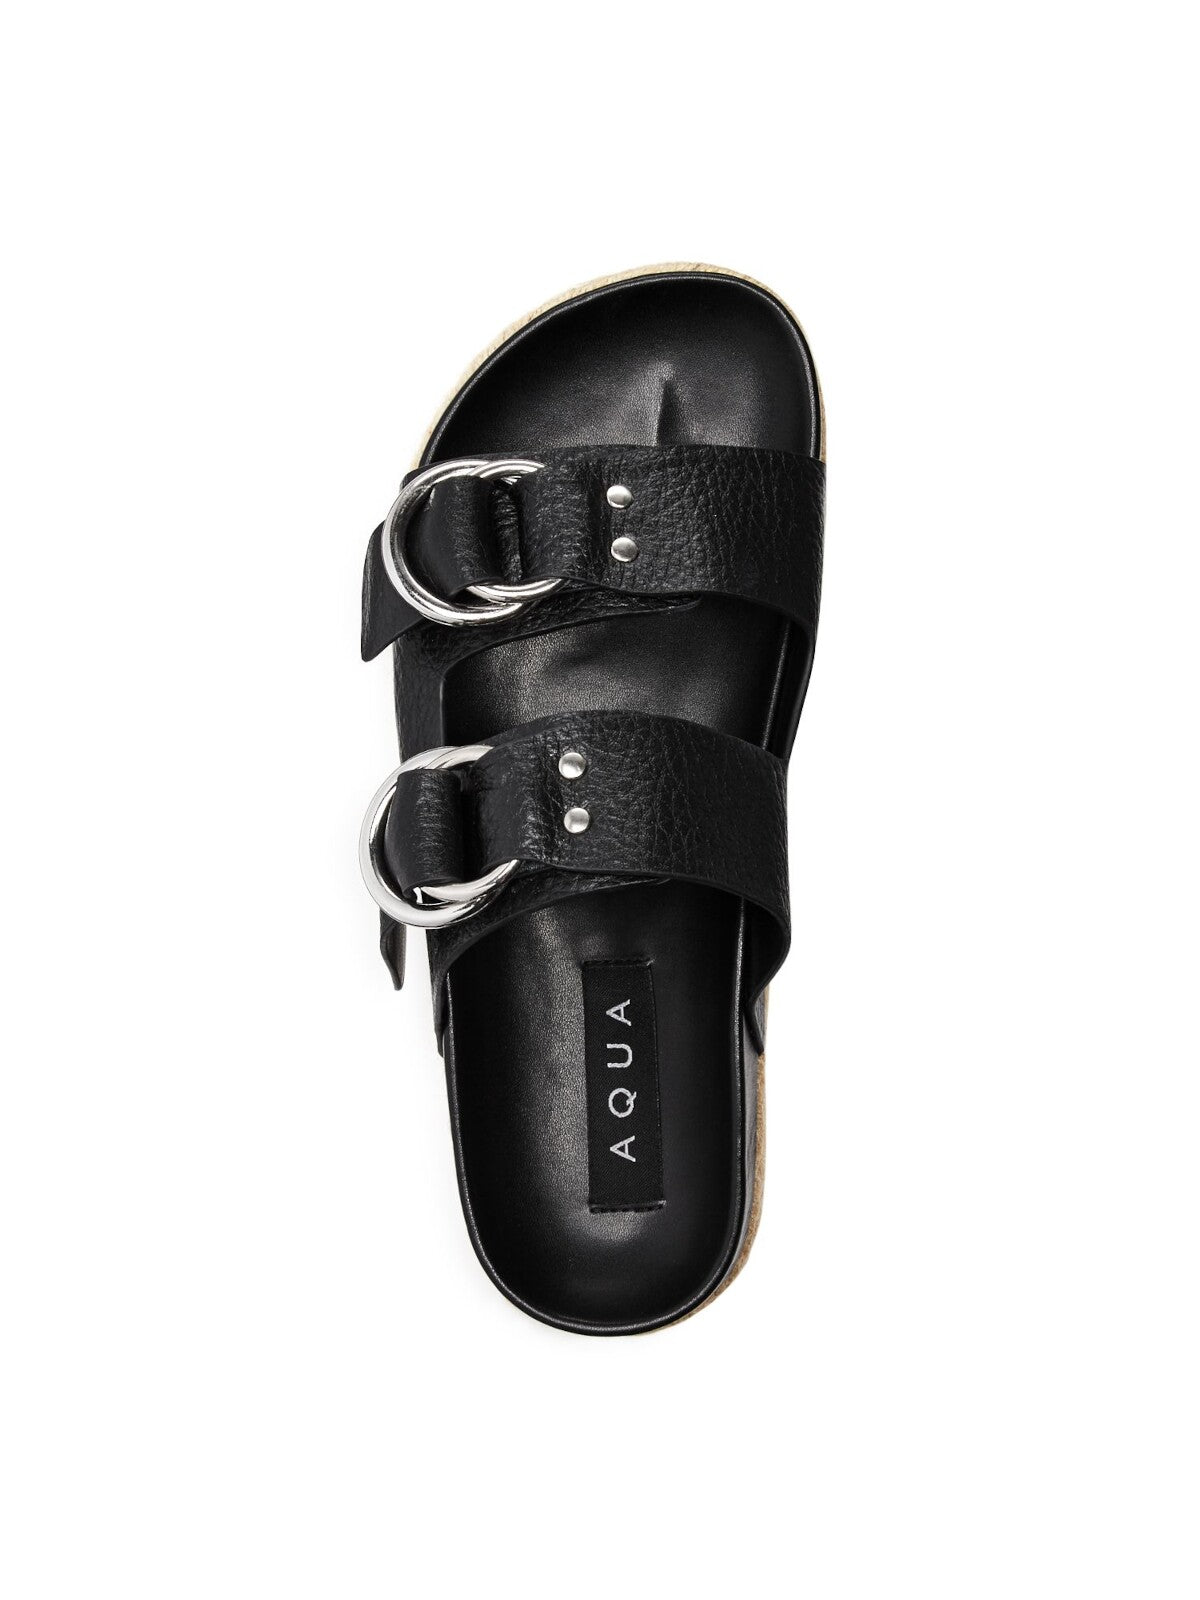 AQUA Womens Black Buckle Accent Studded Kai Round Toe Platform Slip On Leather Espadrille Shoes 6 M